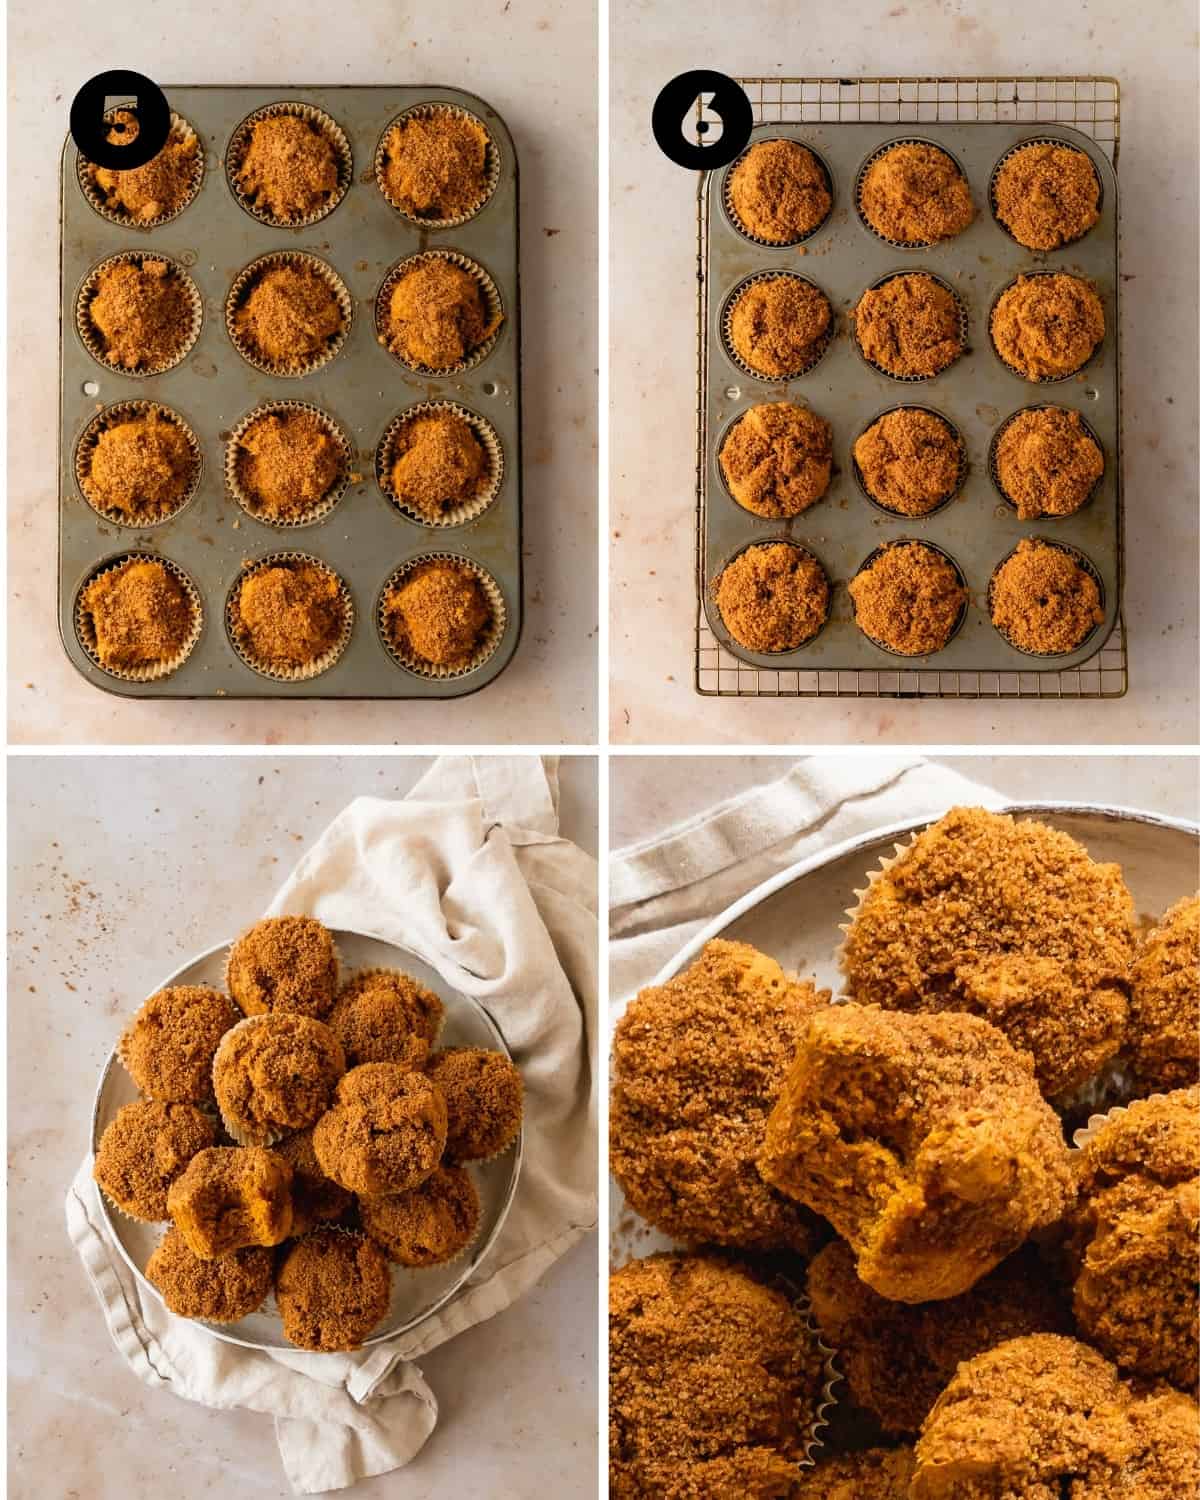 Pumpkin Muffins from Cake Mix Recipe steps 5-6. Baking the muffins and eating the muffins.